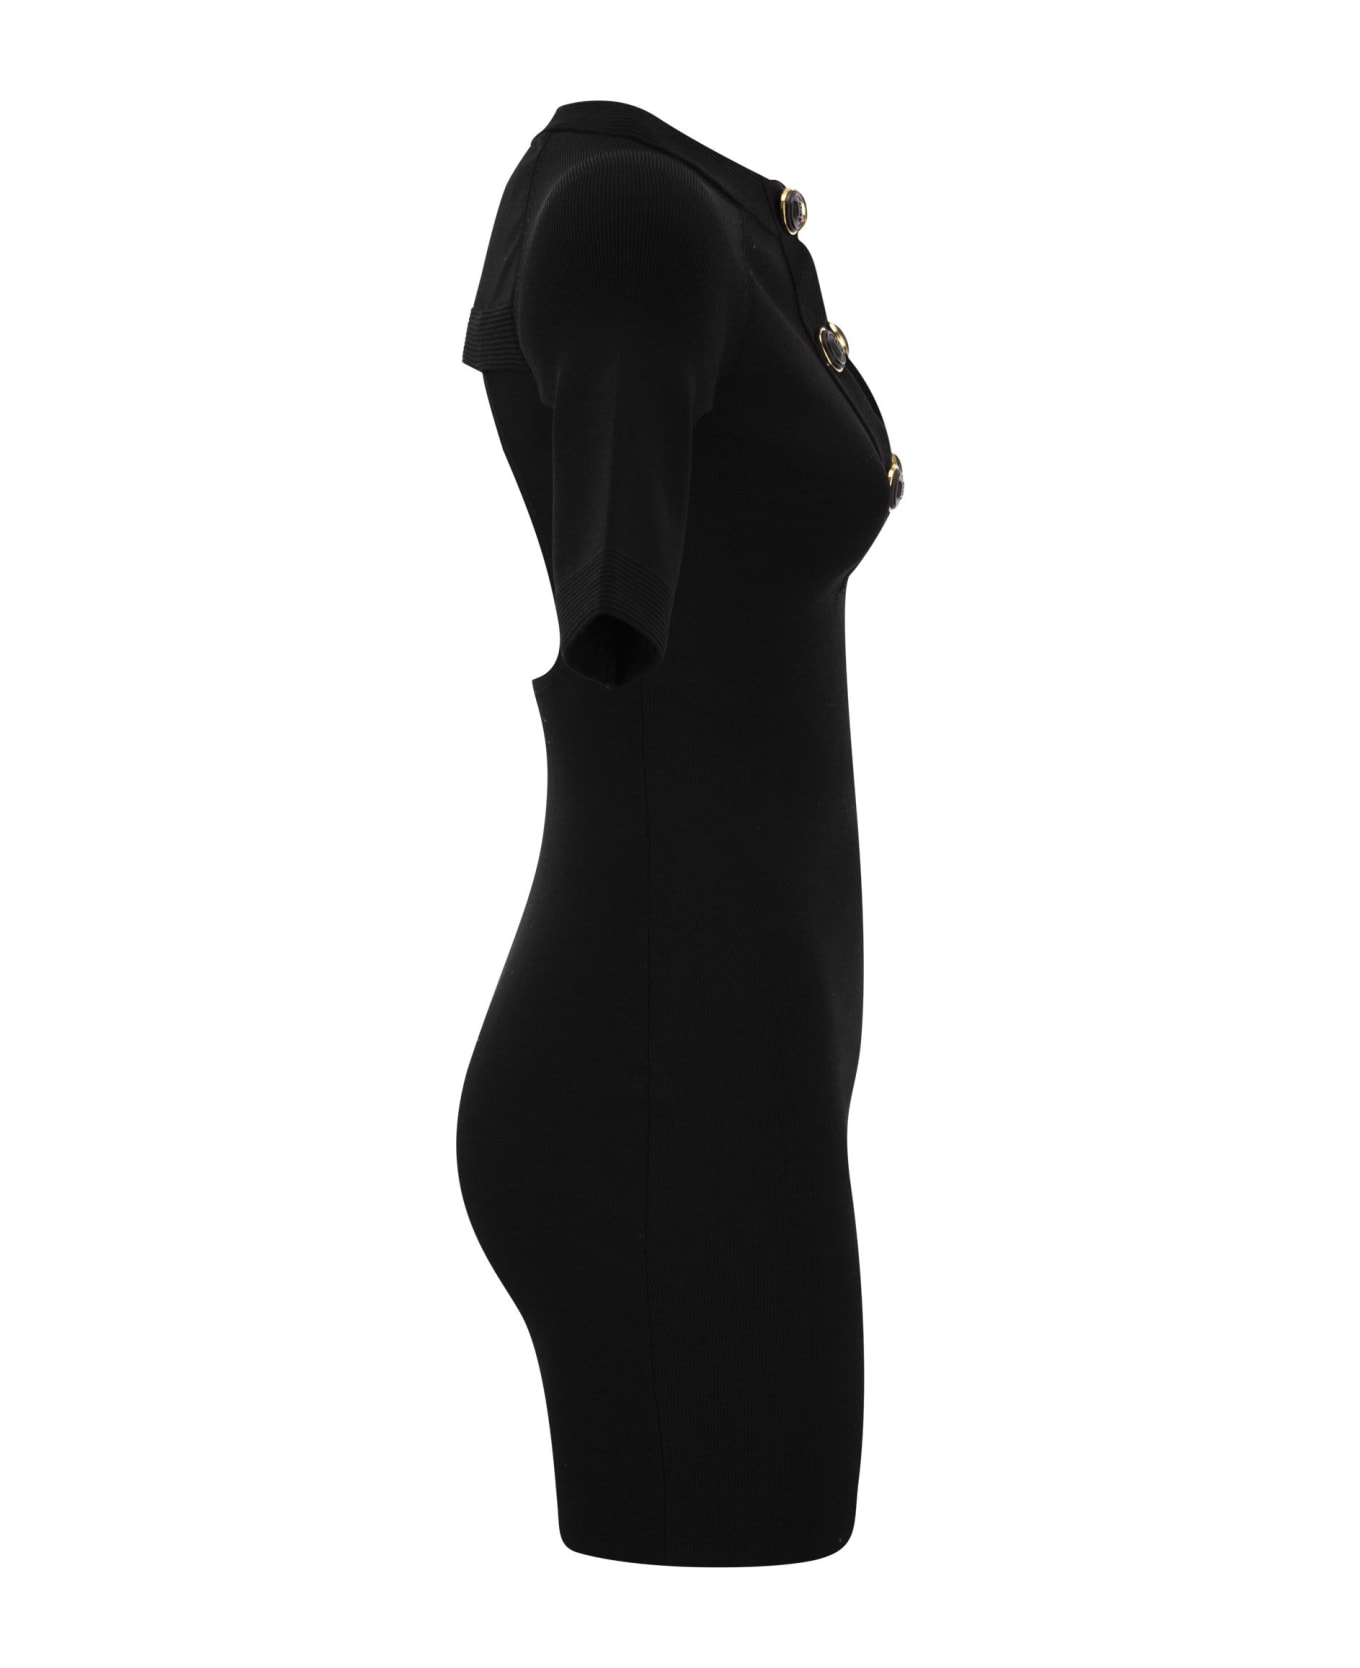 Elisabetta Franchi Black Knit Dress - Black